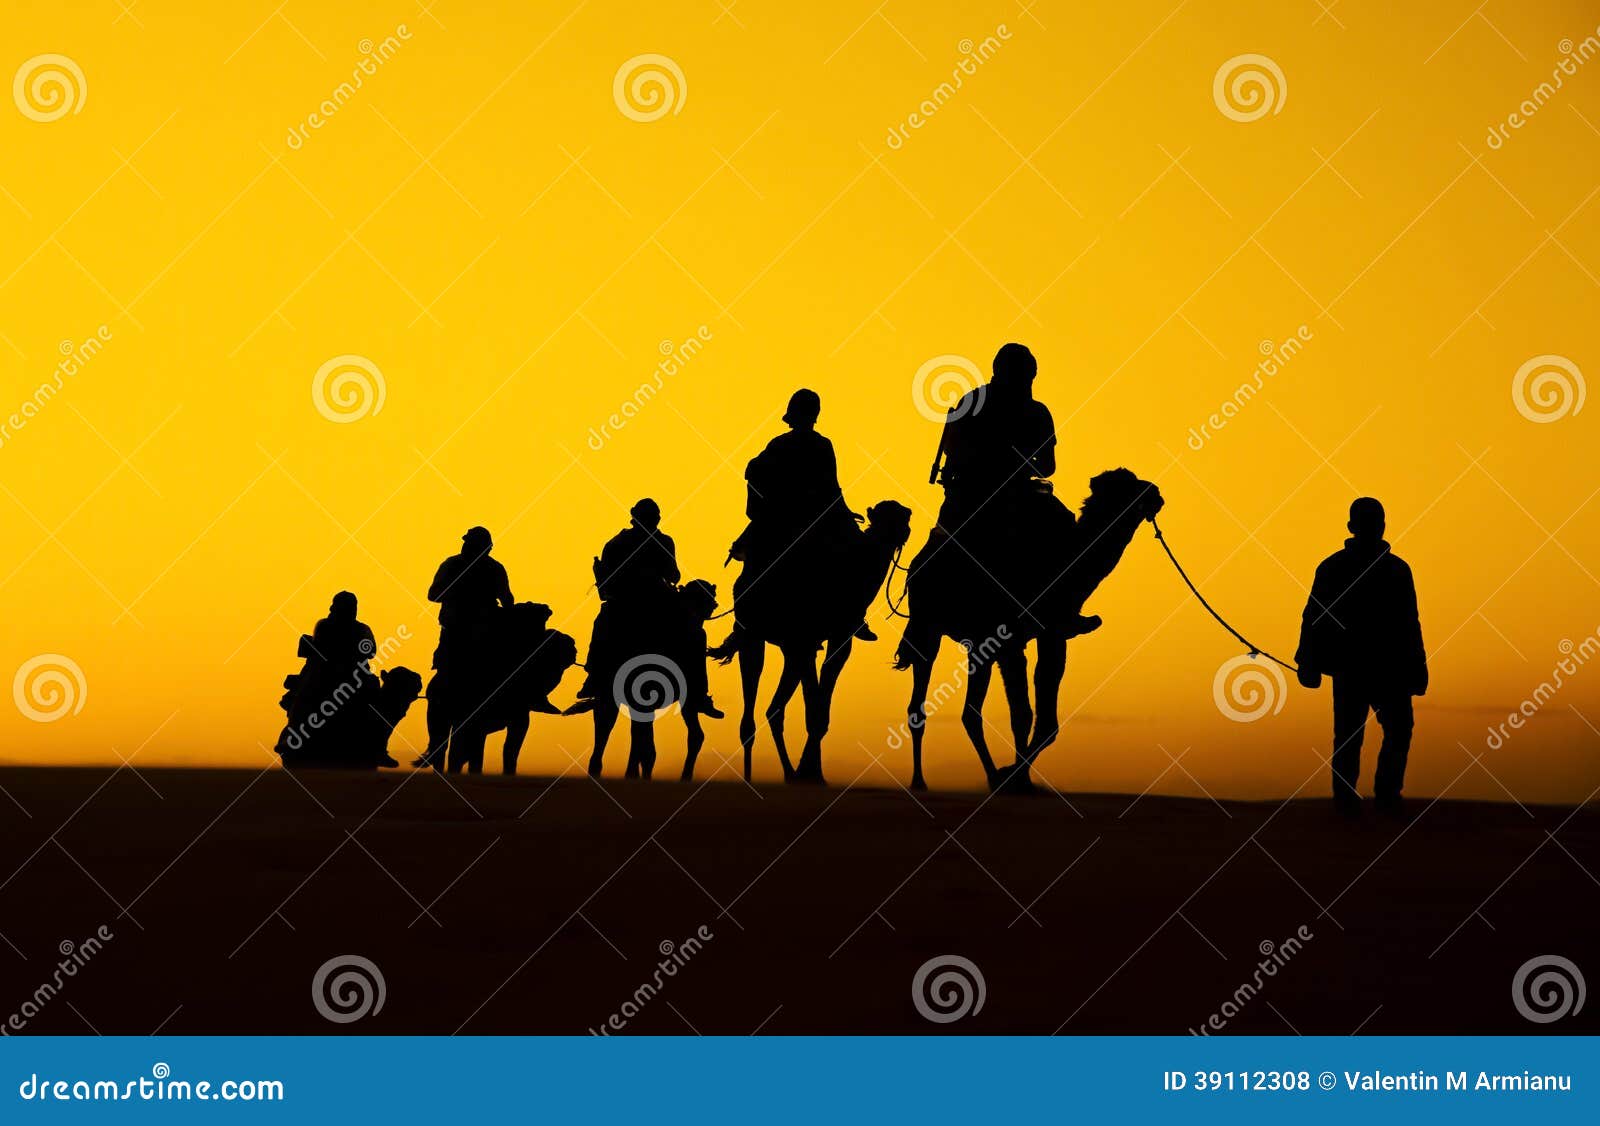 camel caravan silhouette